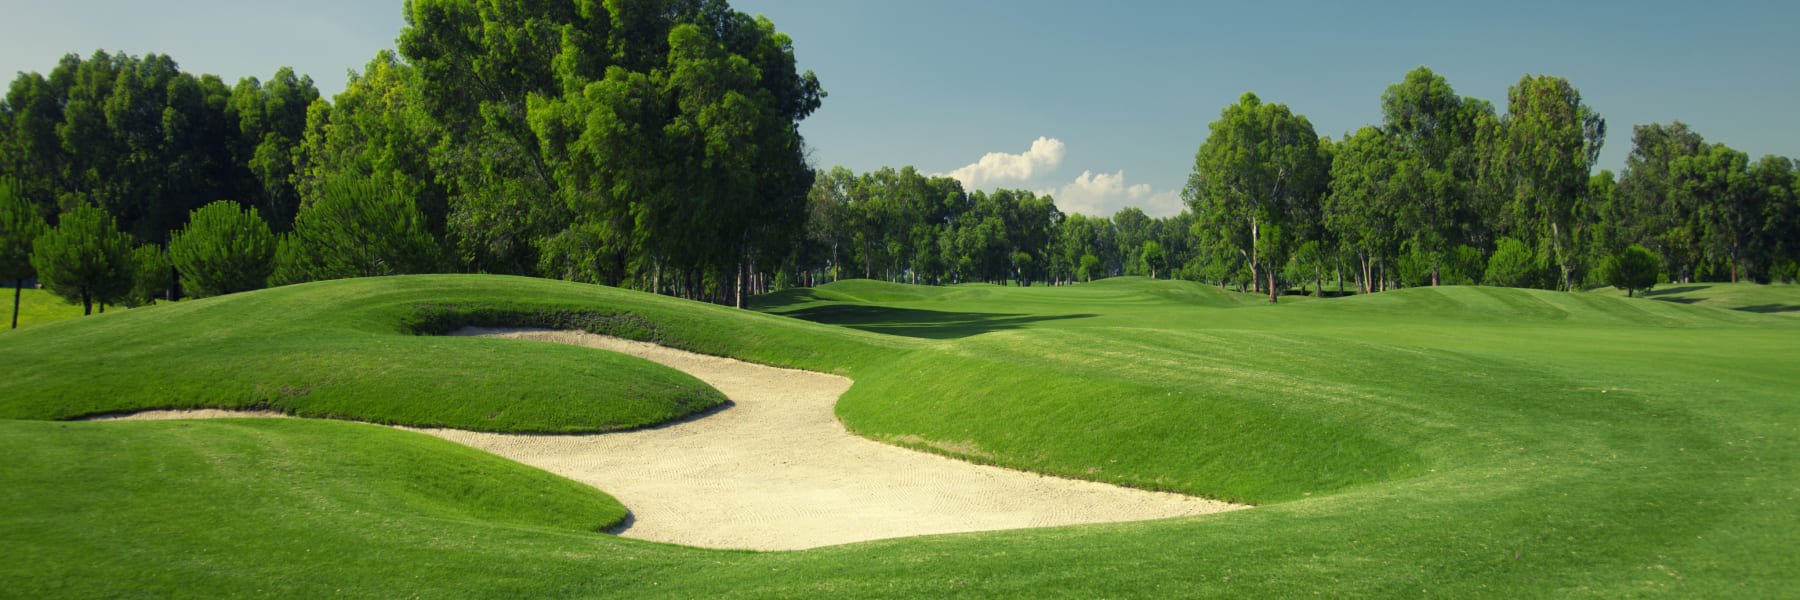 Golf Courses at Brea, California